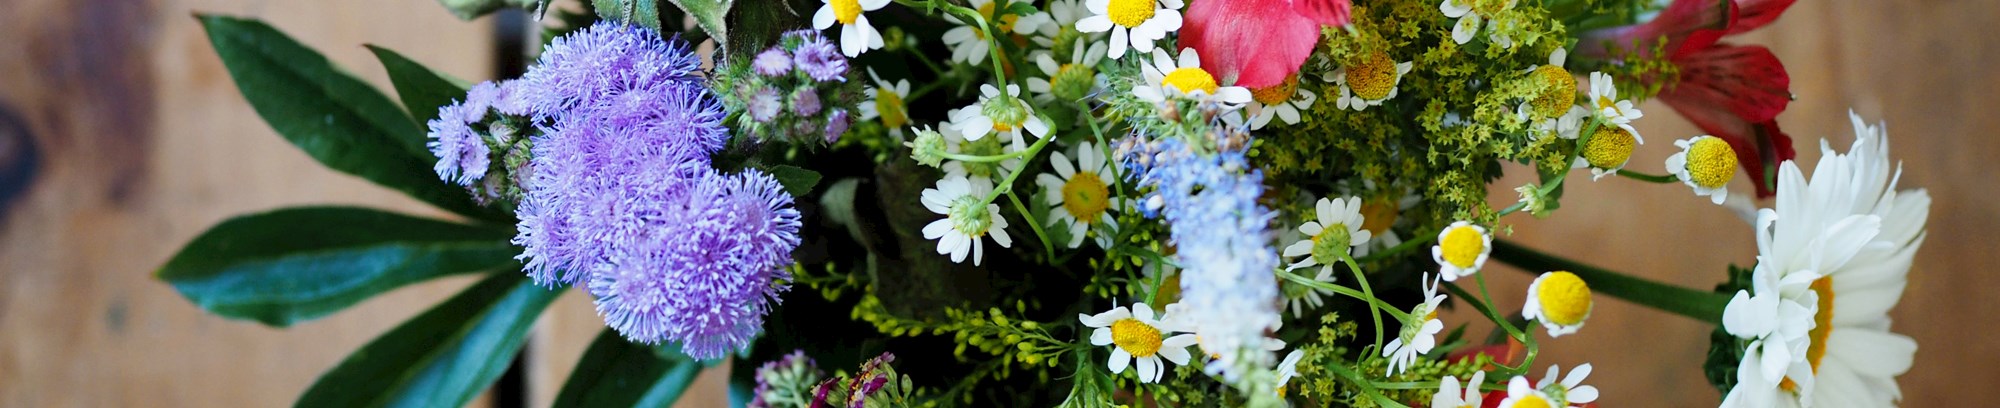 Lær bæredygtig blomsterbinding hos FOF Nordsjælland